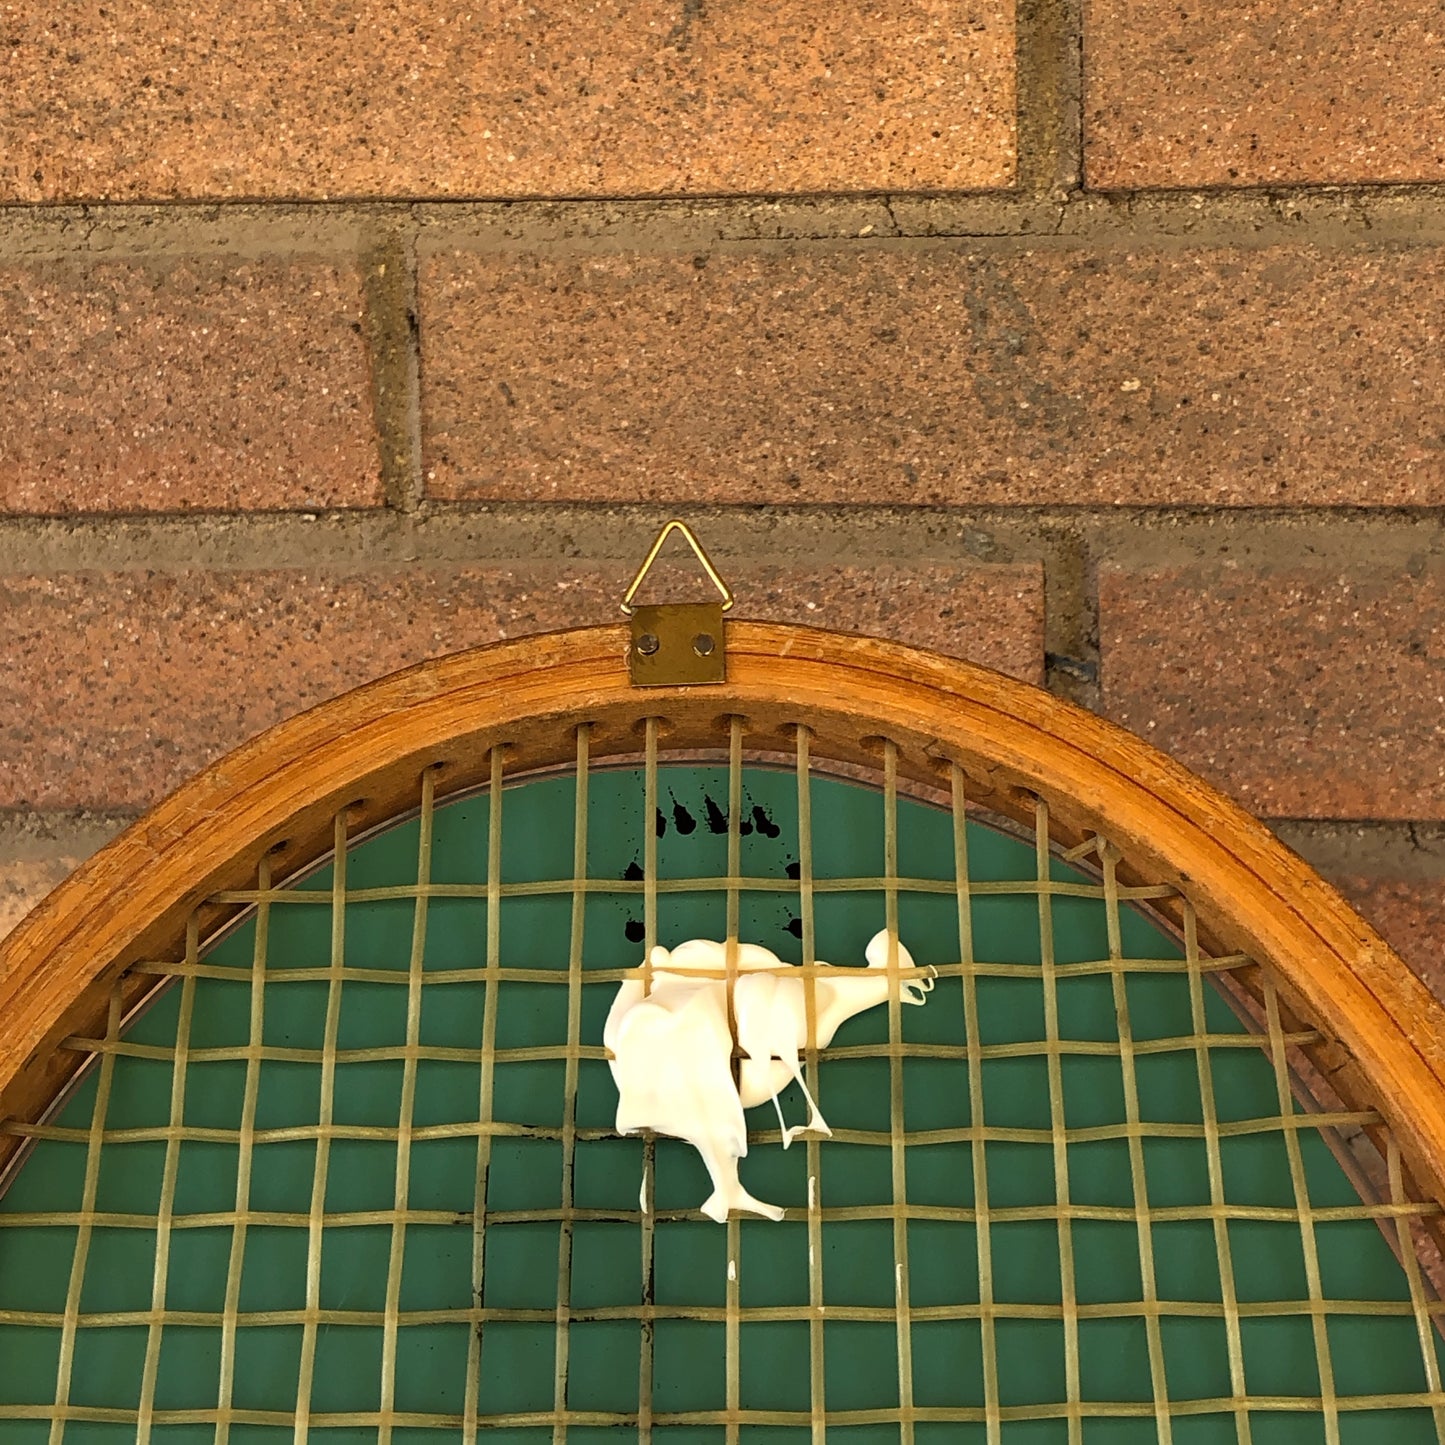 Racchetta da Tennis Vintage Slazenger in Legno con Specchio- Vintage Mirror wood Racket